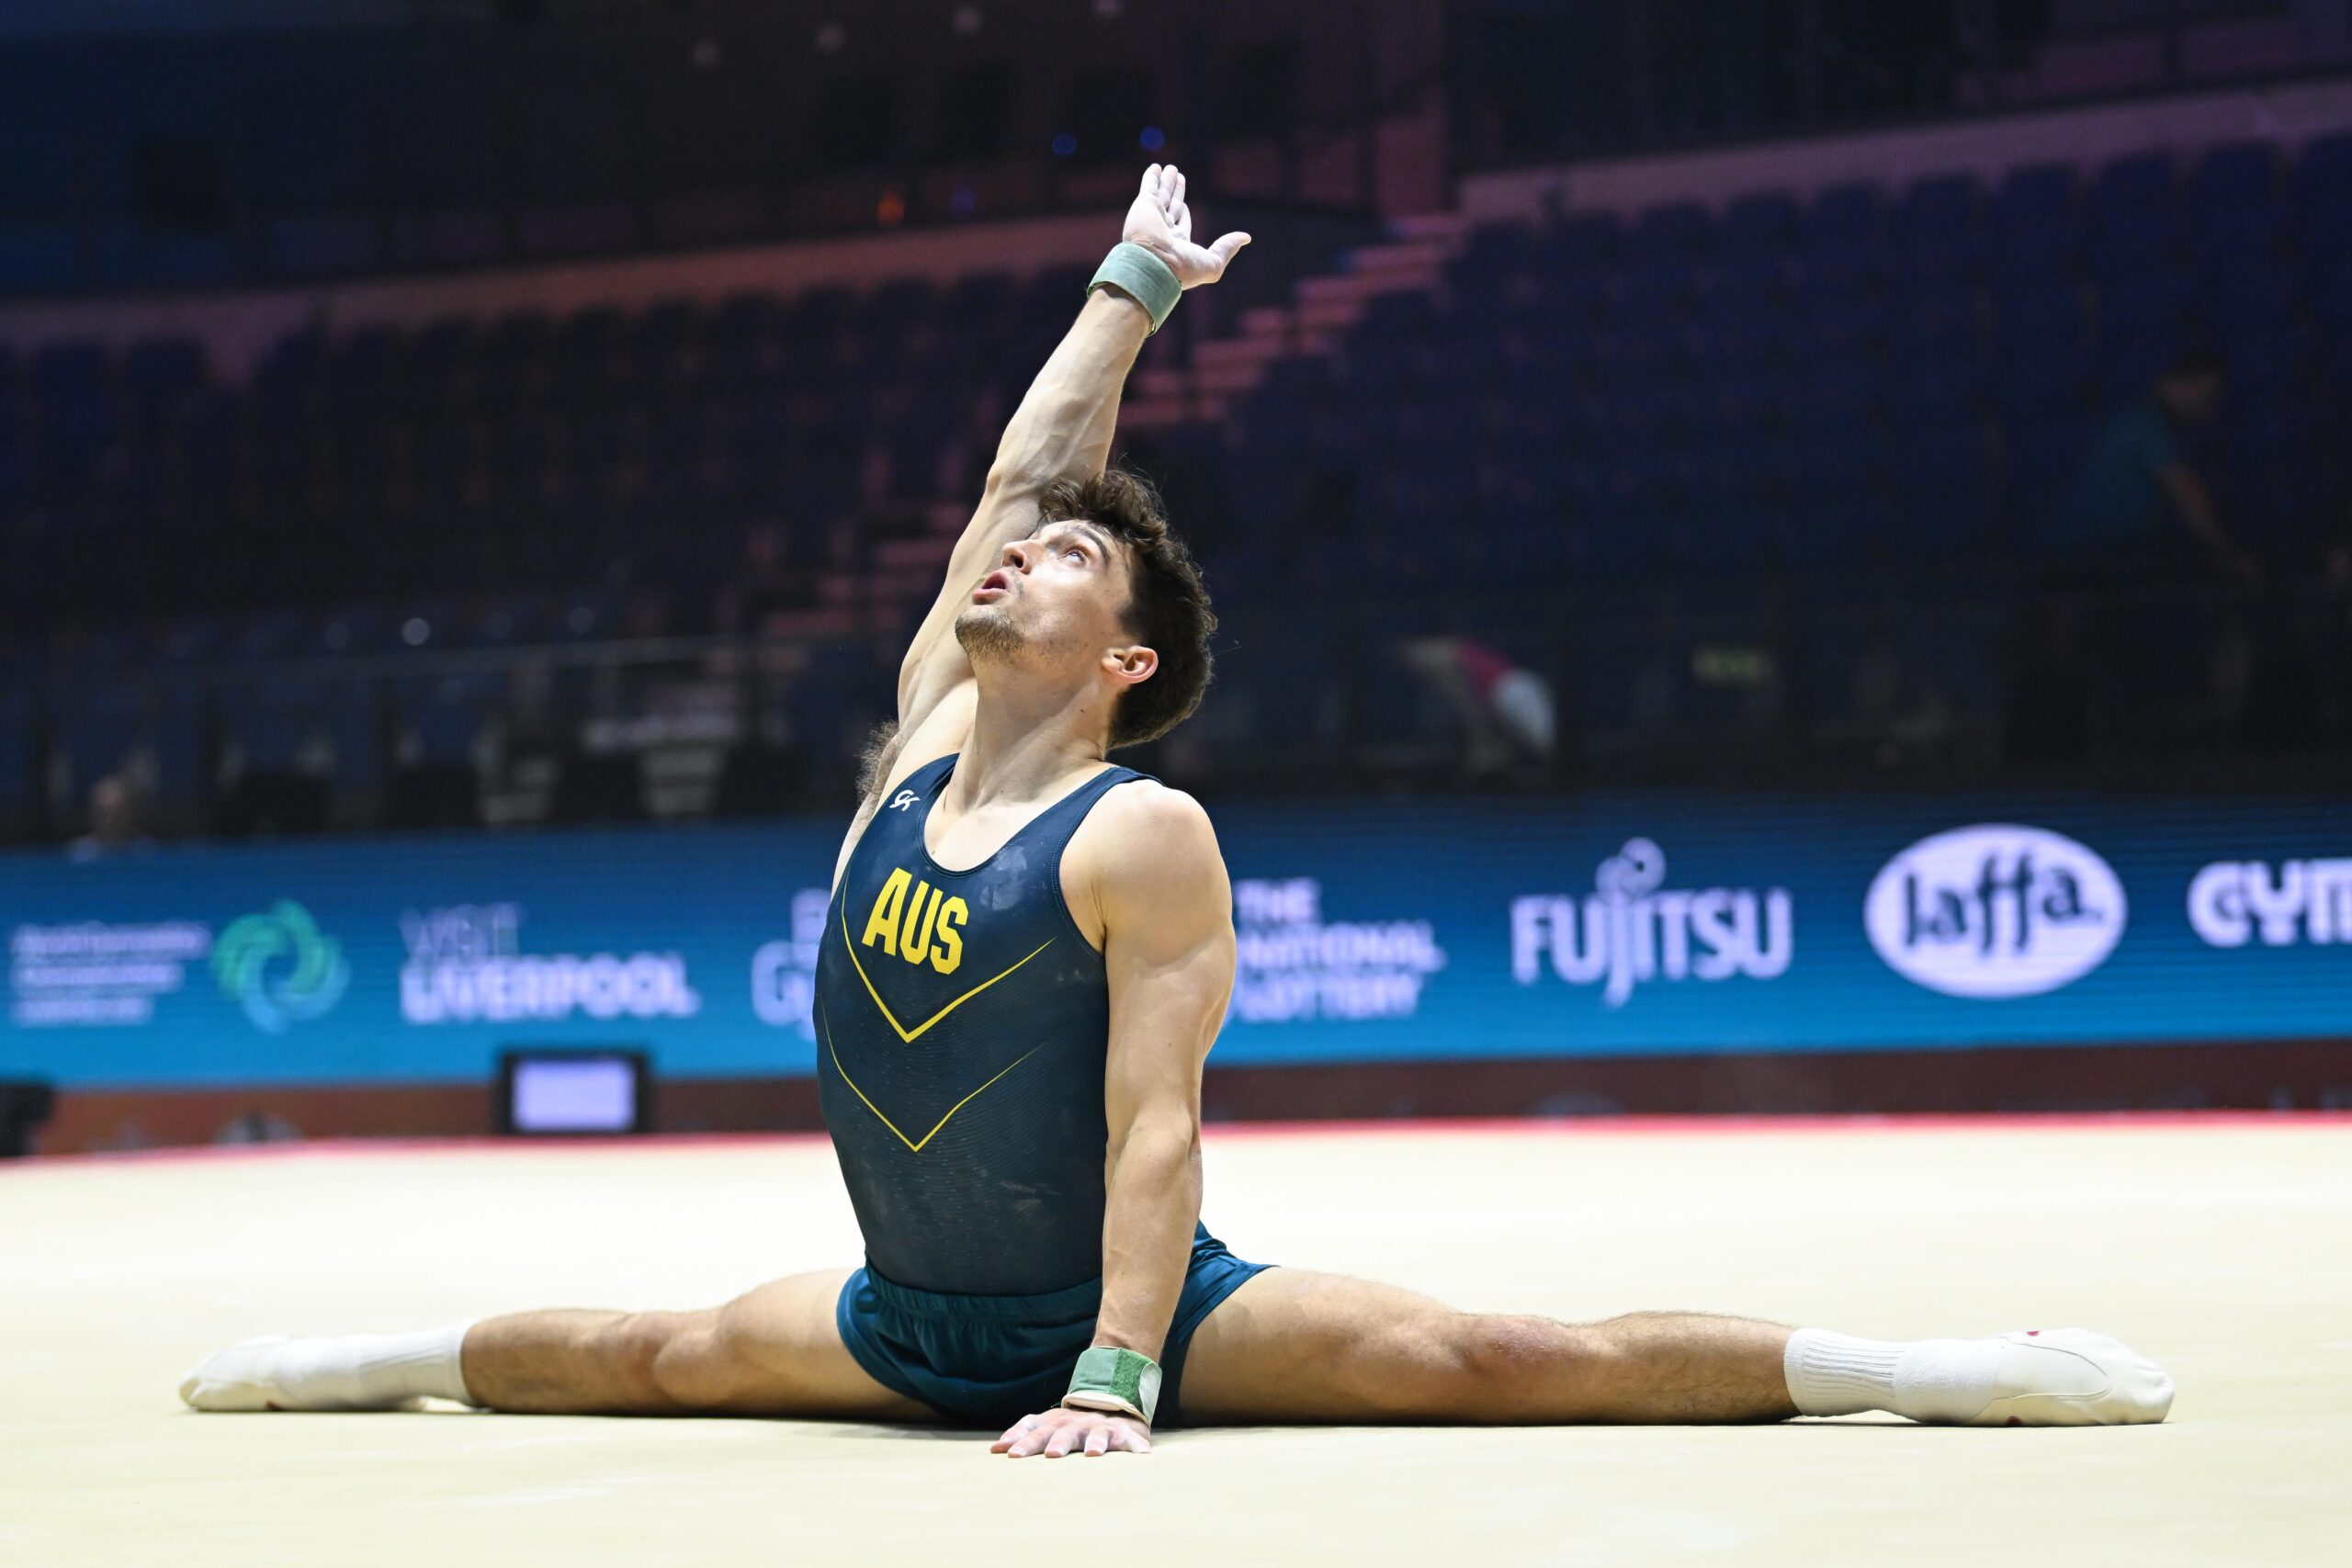 Heath Thorpe trains on floor during podium training at the 2022 World Gymnastics Championships.